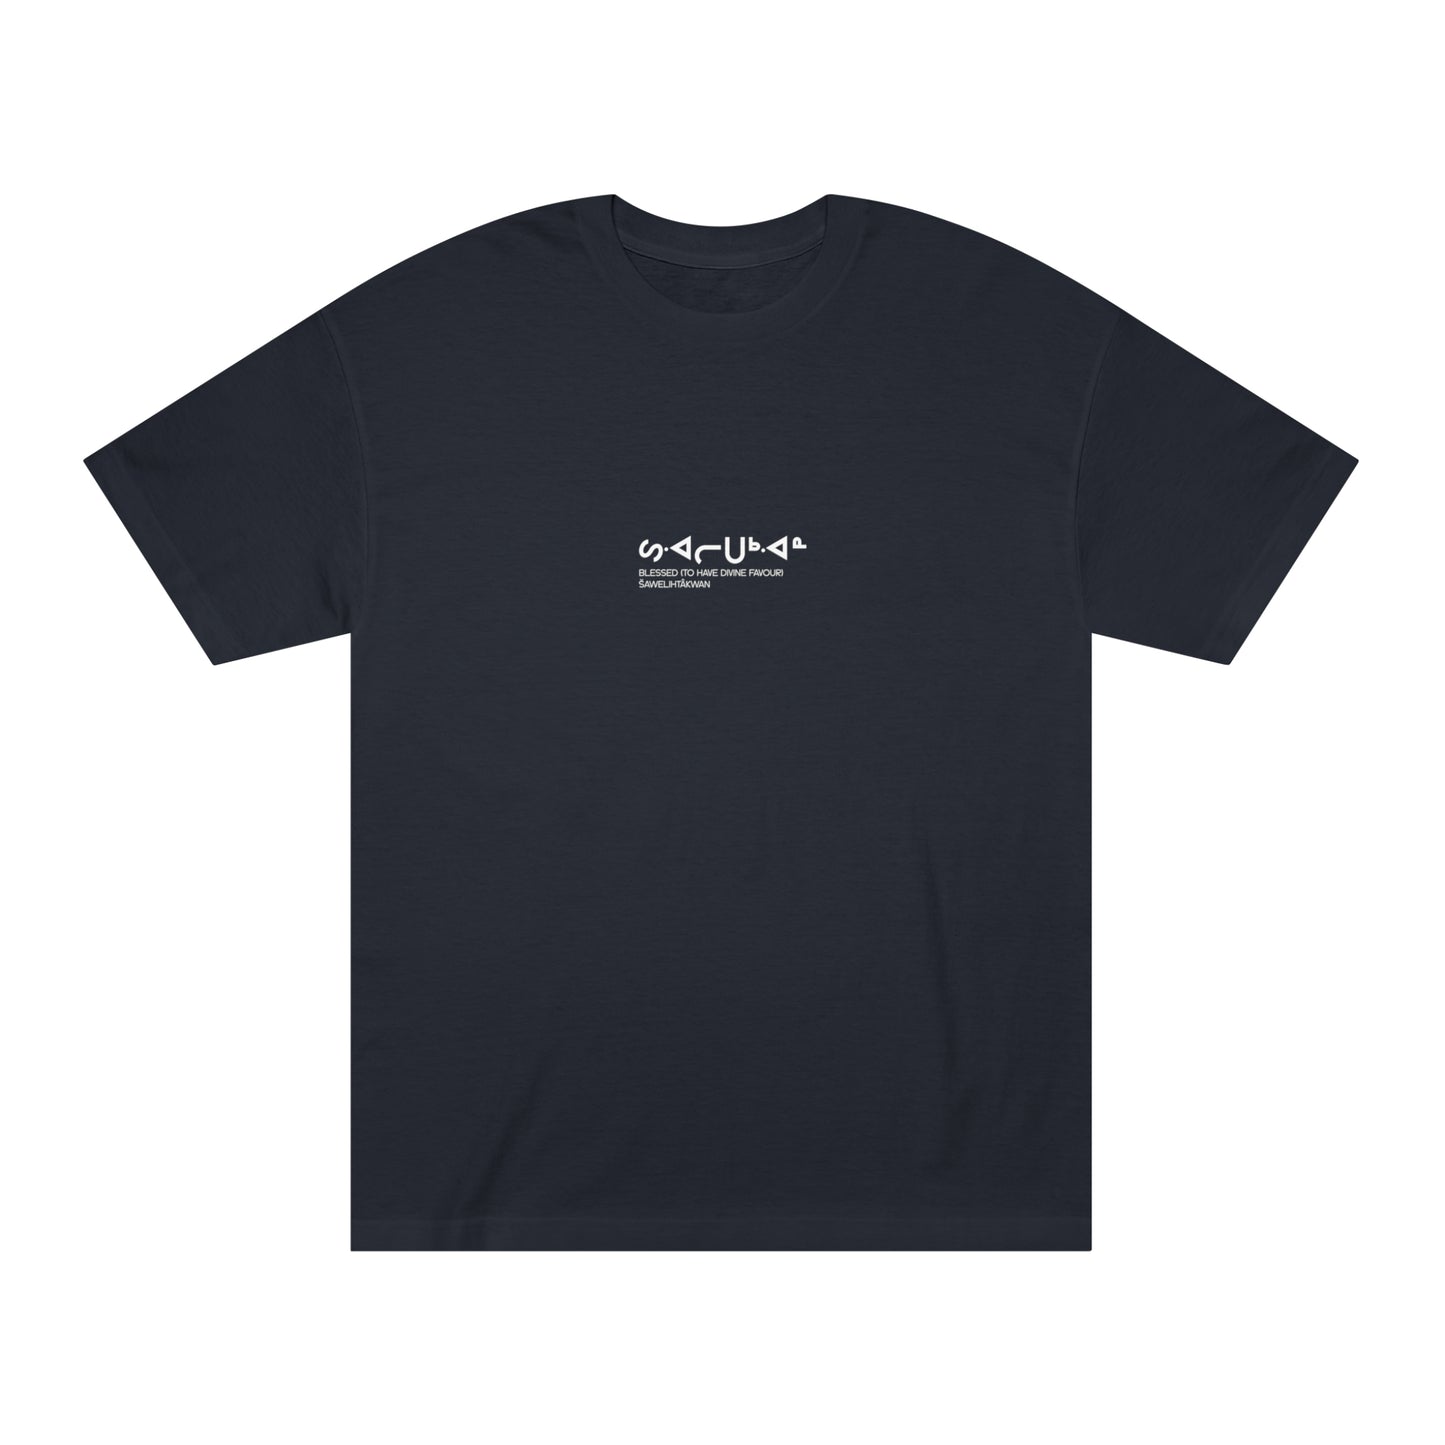 Creator Has My Back // T-shirt